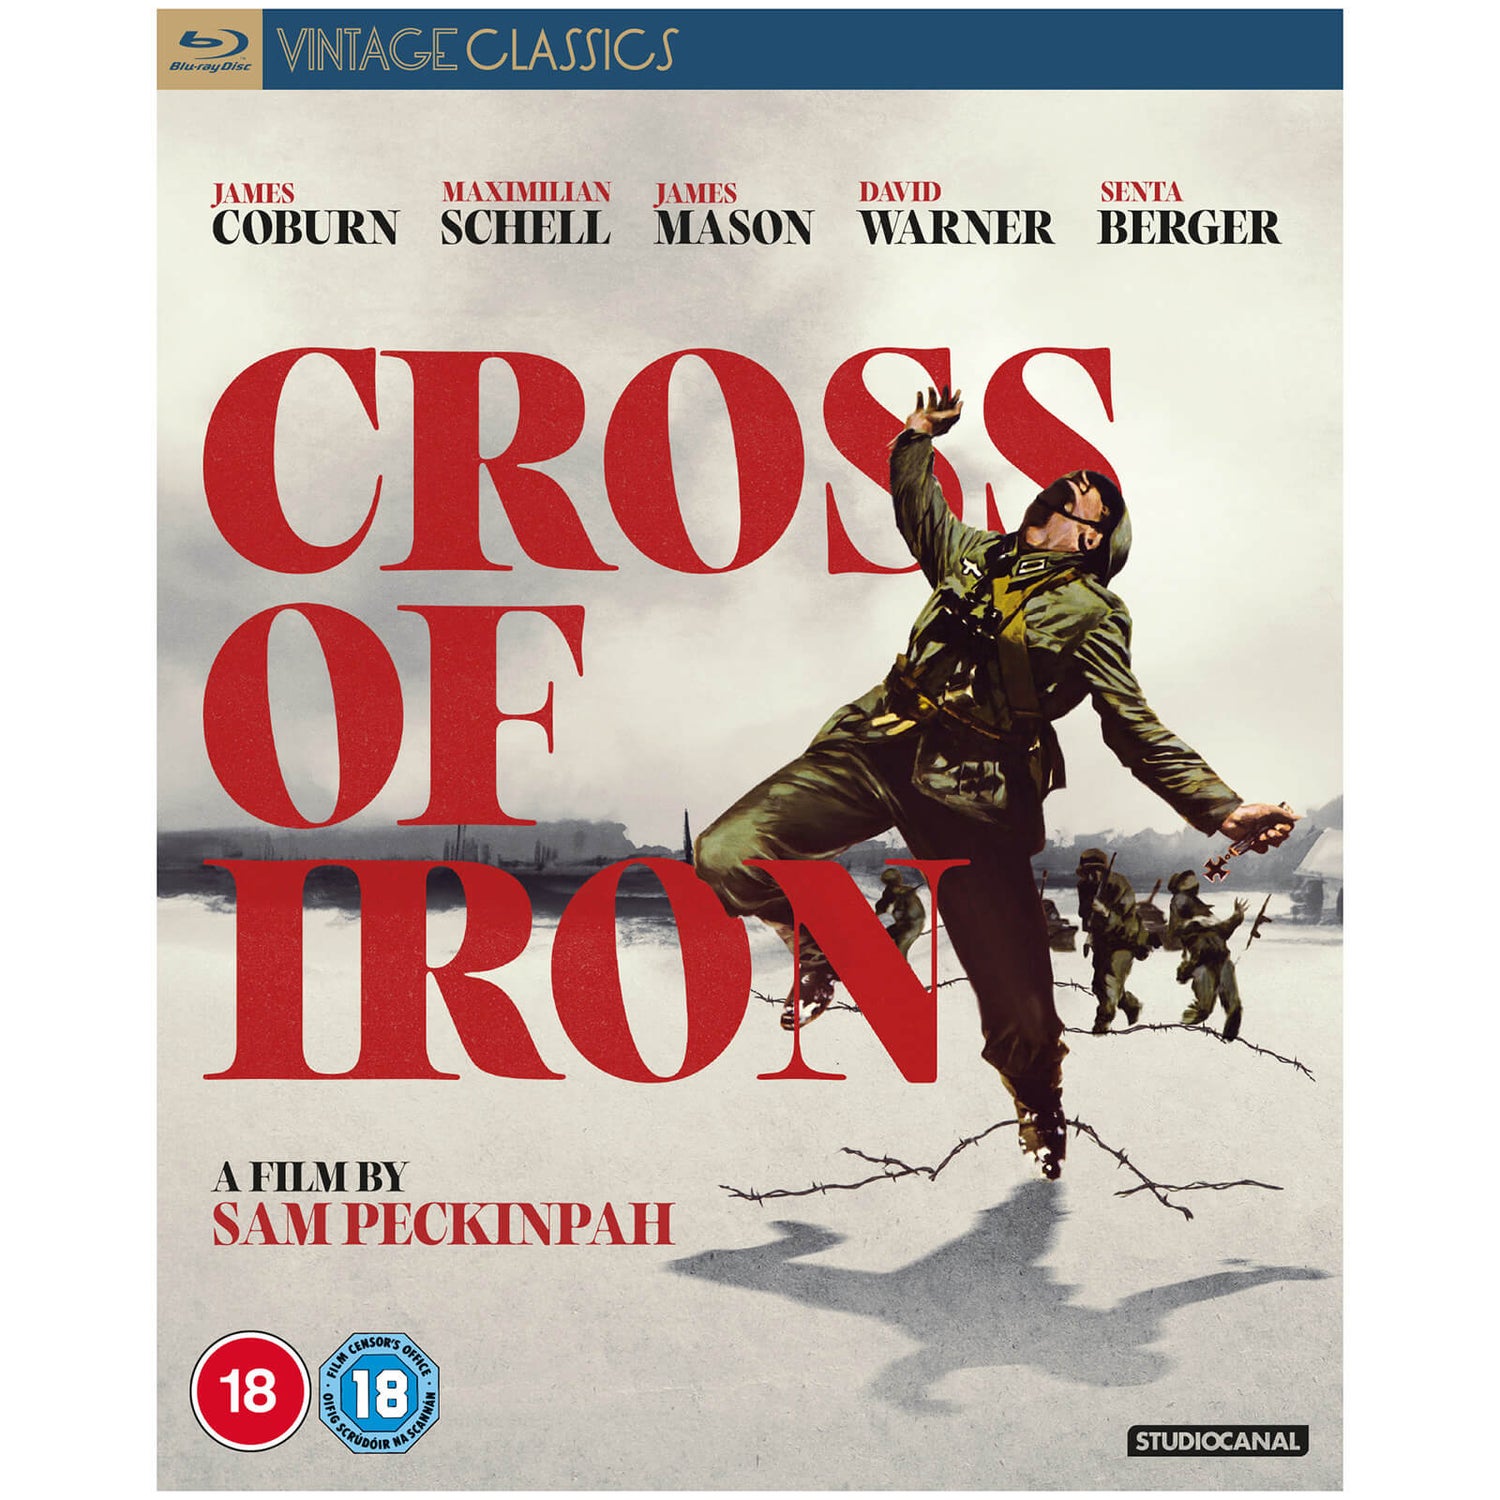 Cross of Iron (Vintage Classics)